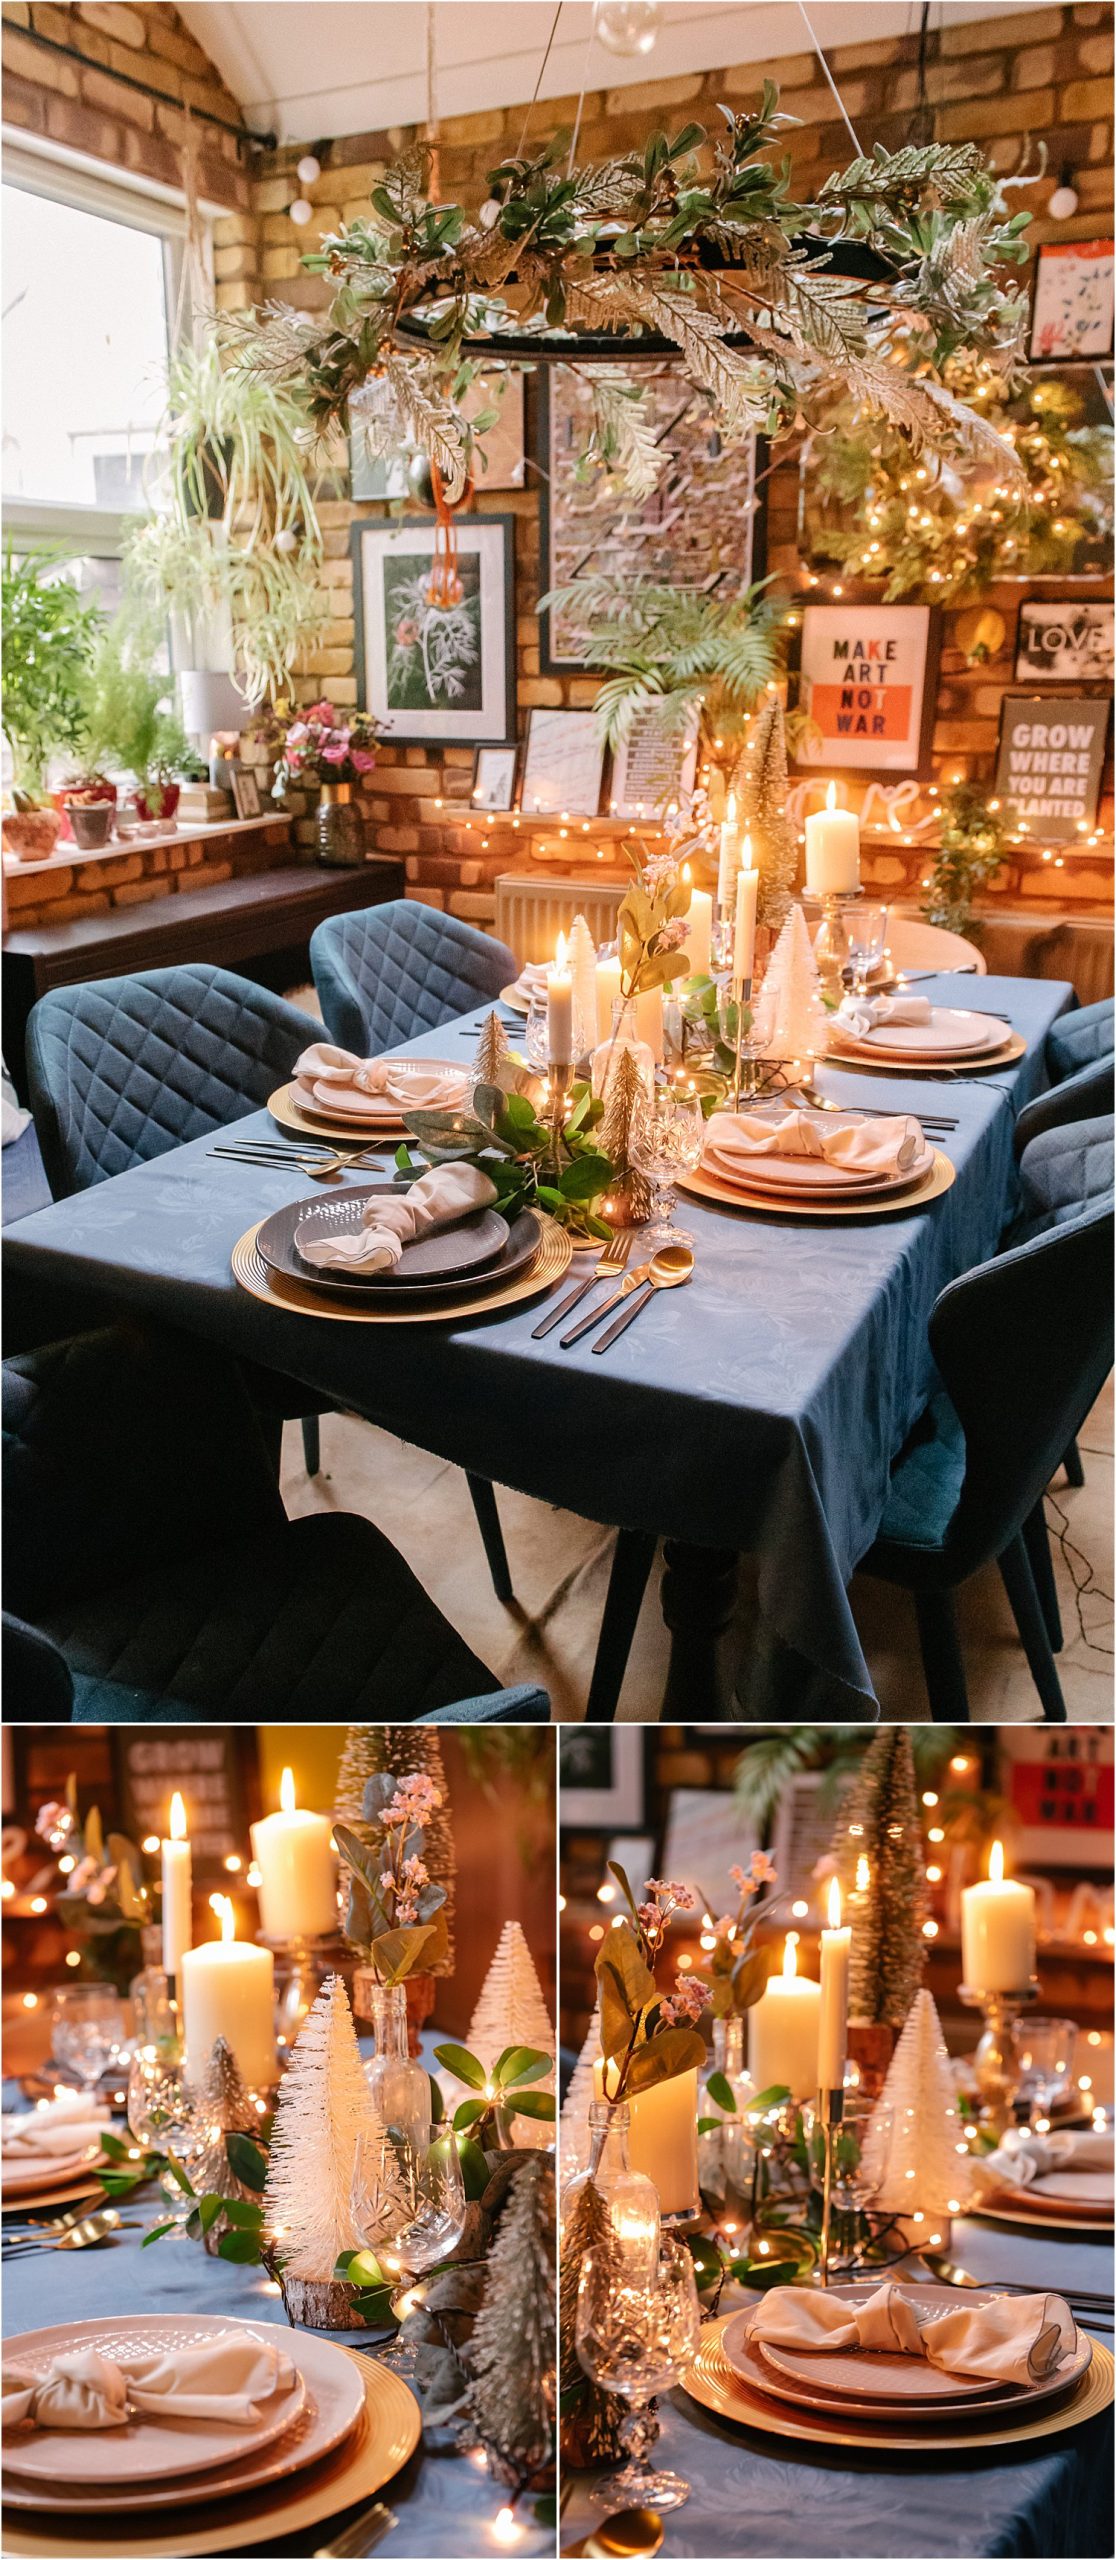 10-Christmas-table-setting-ideas-two-tone-monochrome-lily-sawyer-photo